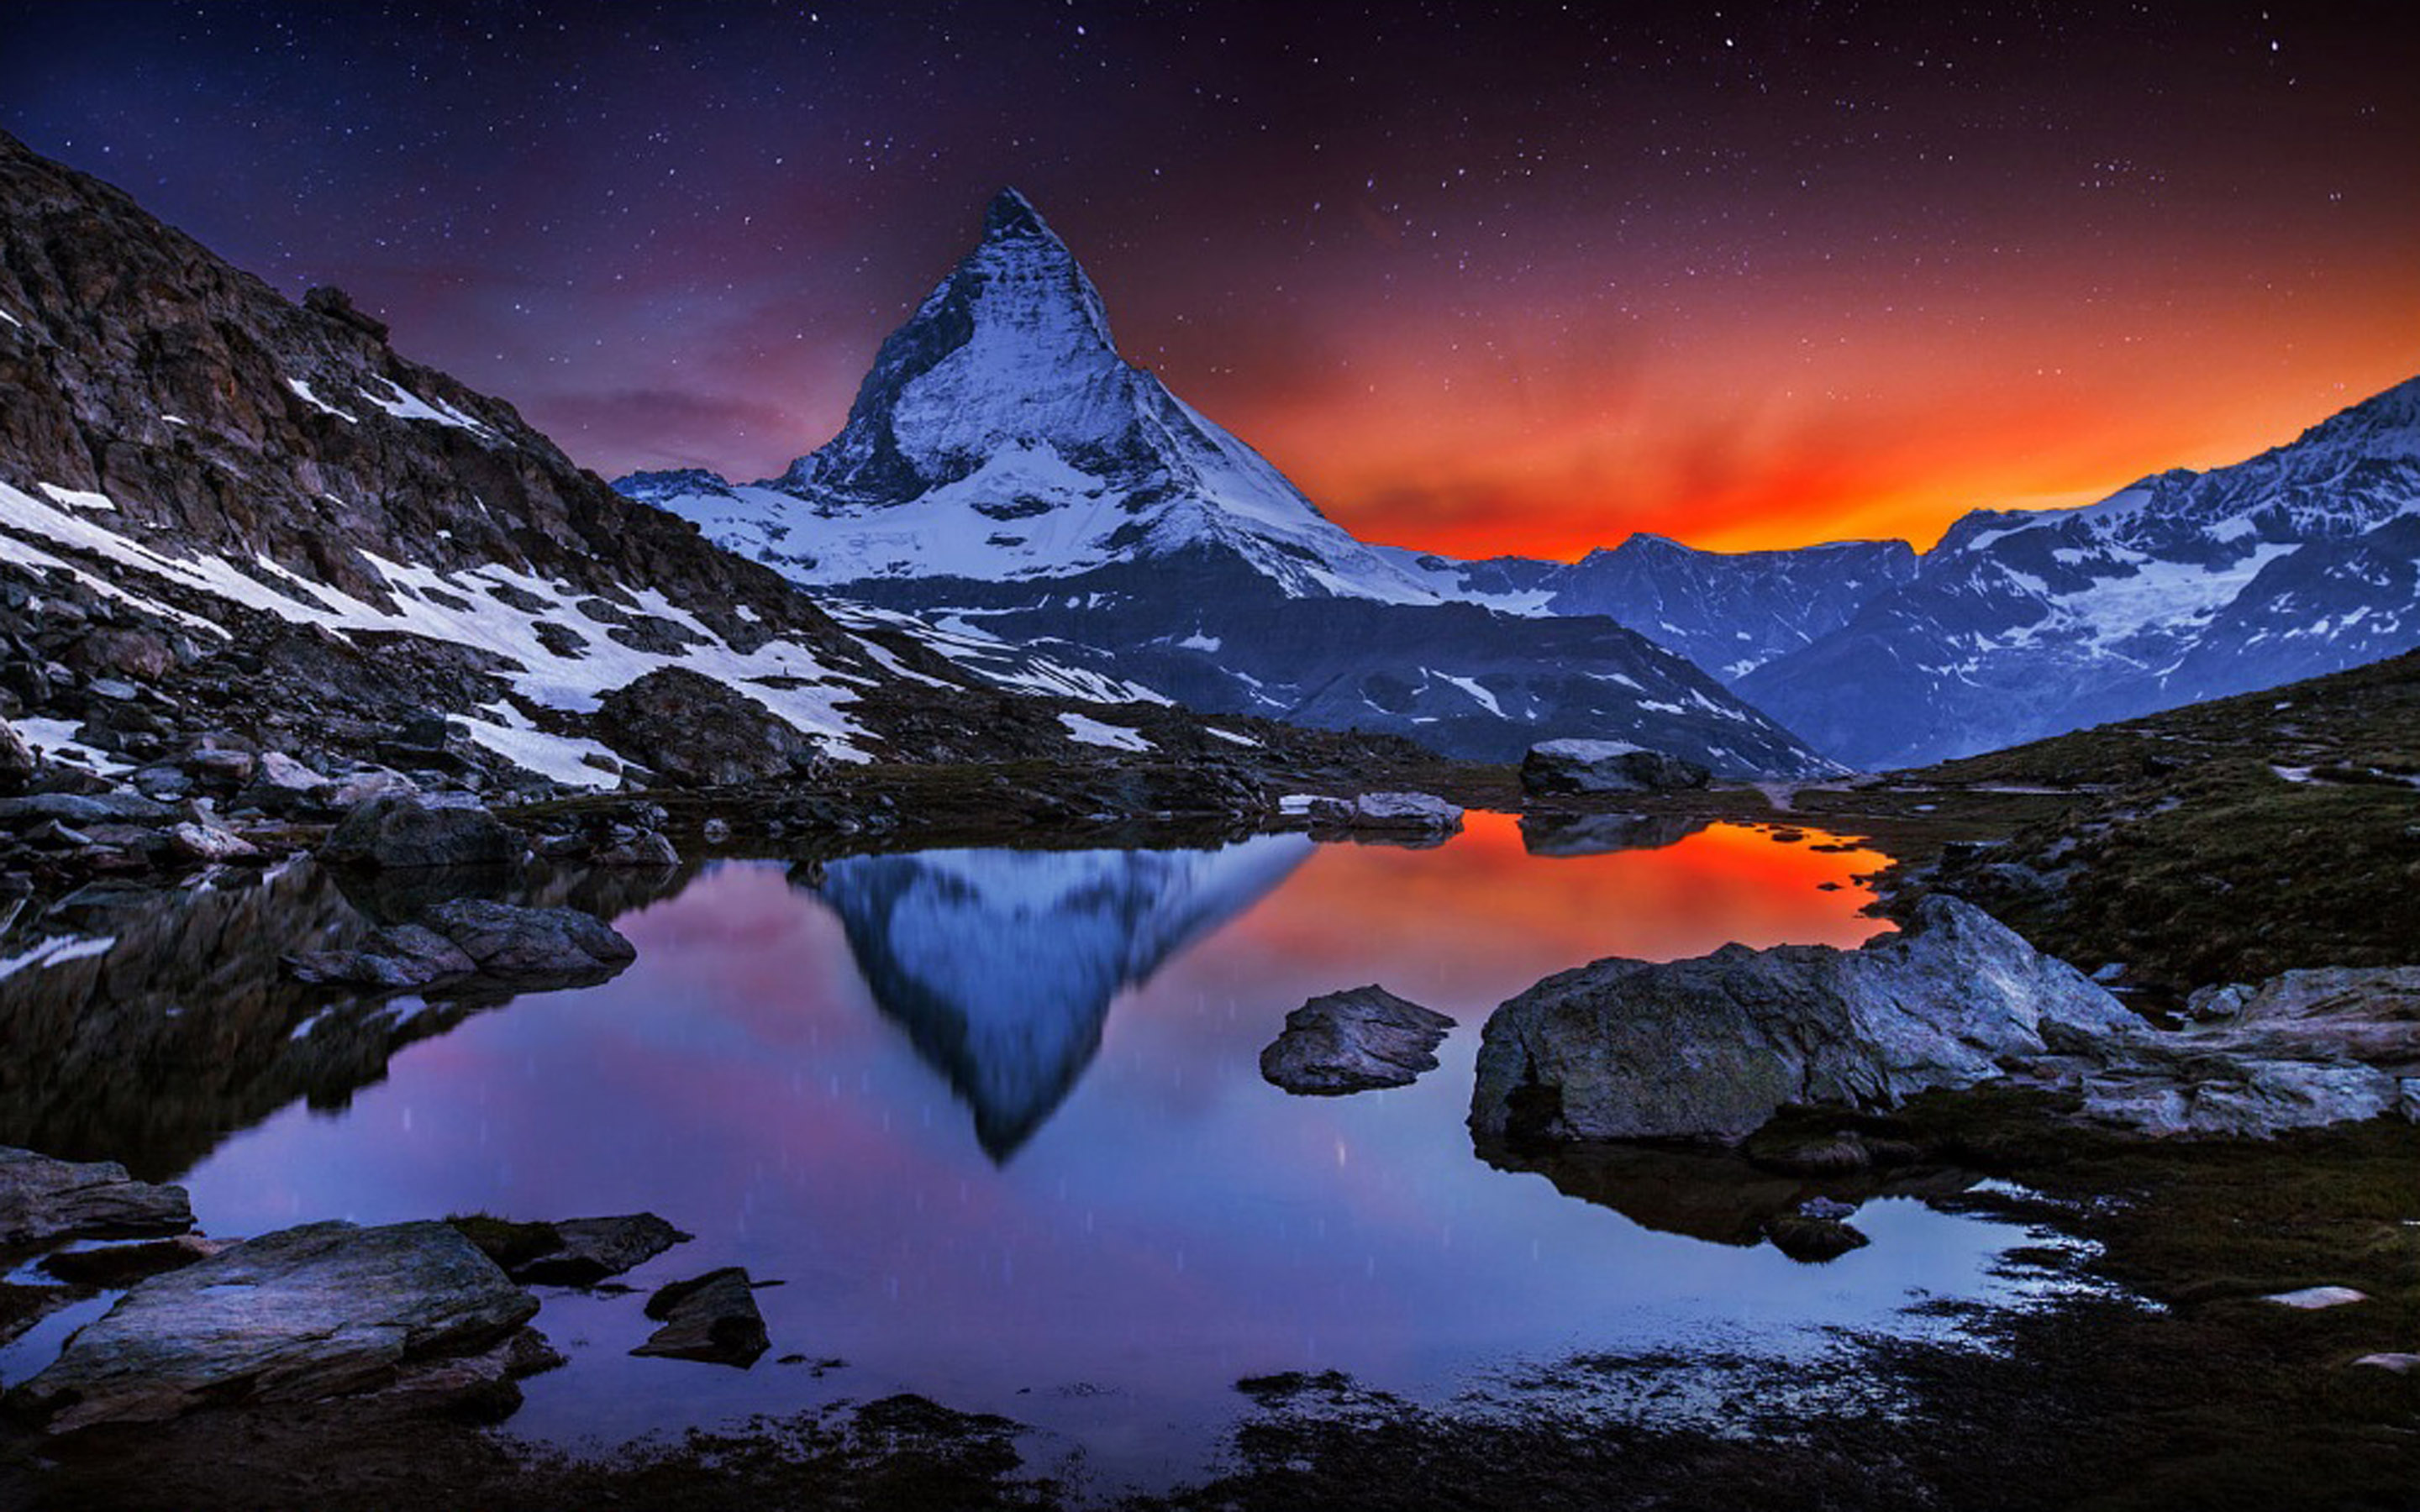 The Matterhorn German Excuse Matərˌhɔrn Is A Mountain In The Alps